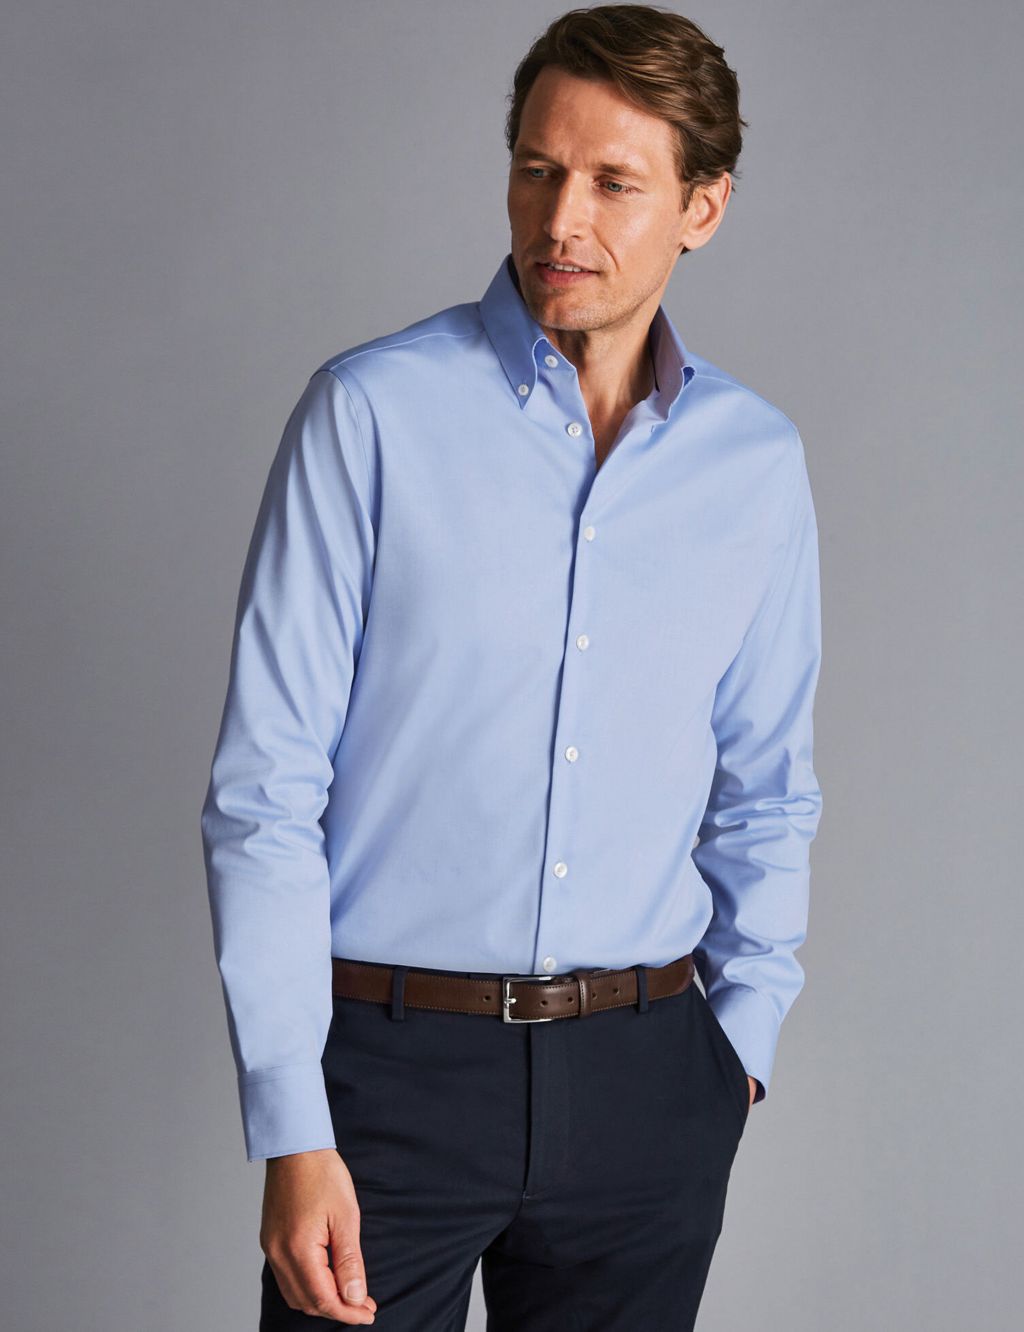 Men's Button-Down Collar Shirts | M&S